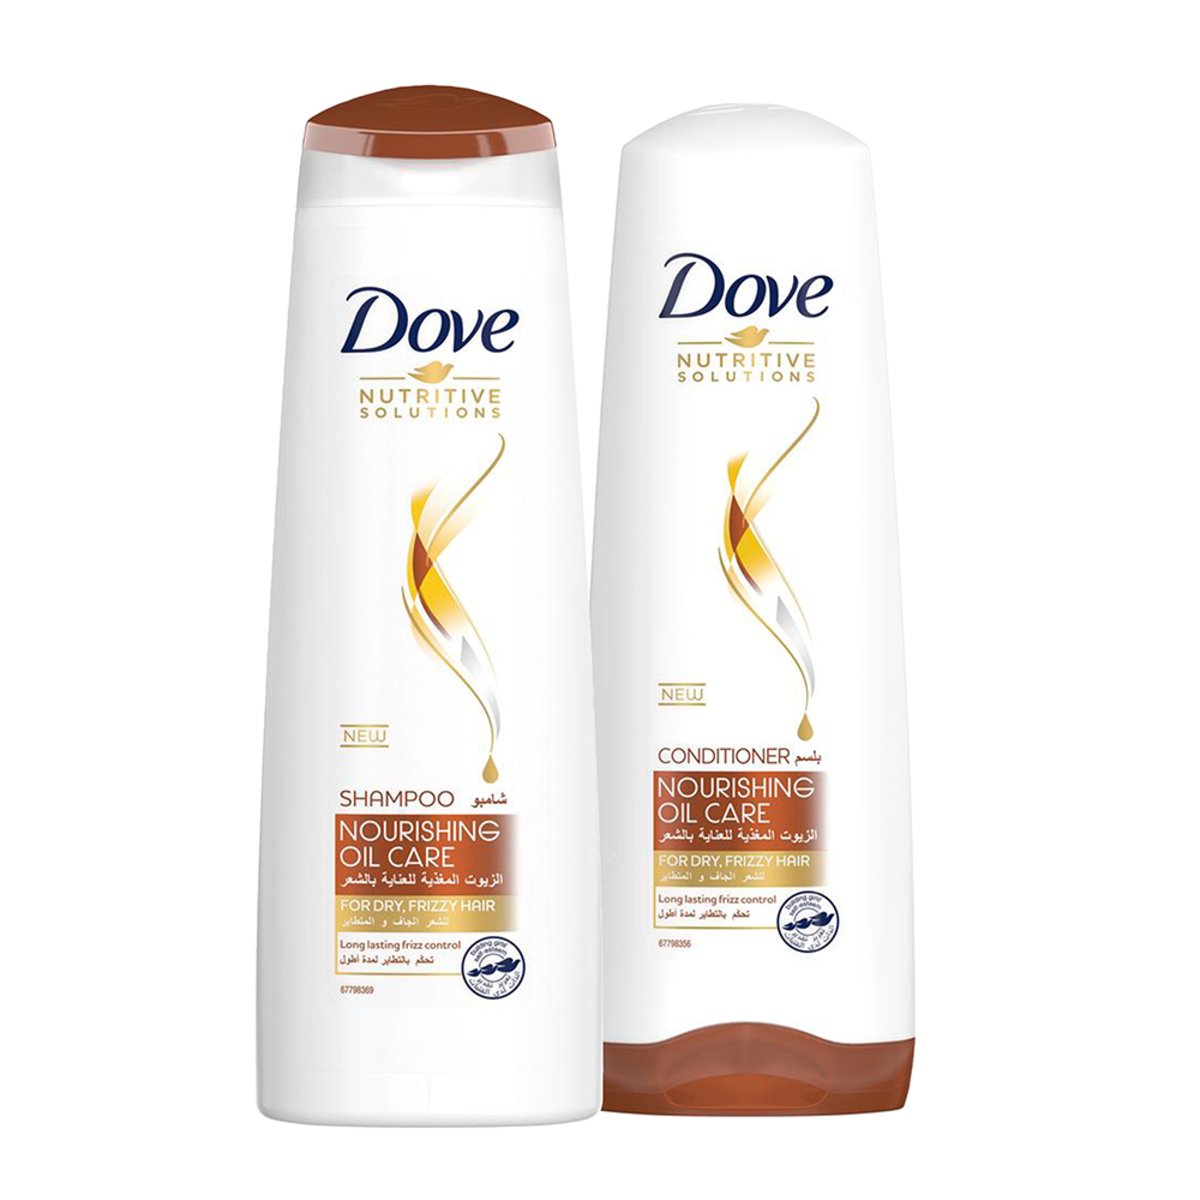 Dove Shampoo Nutritive Solutions Nourishing Oil 400 ml + Conditioner 320 ml